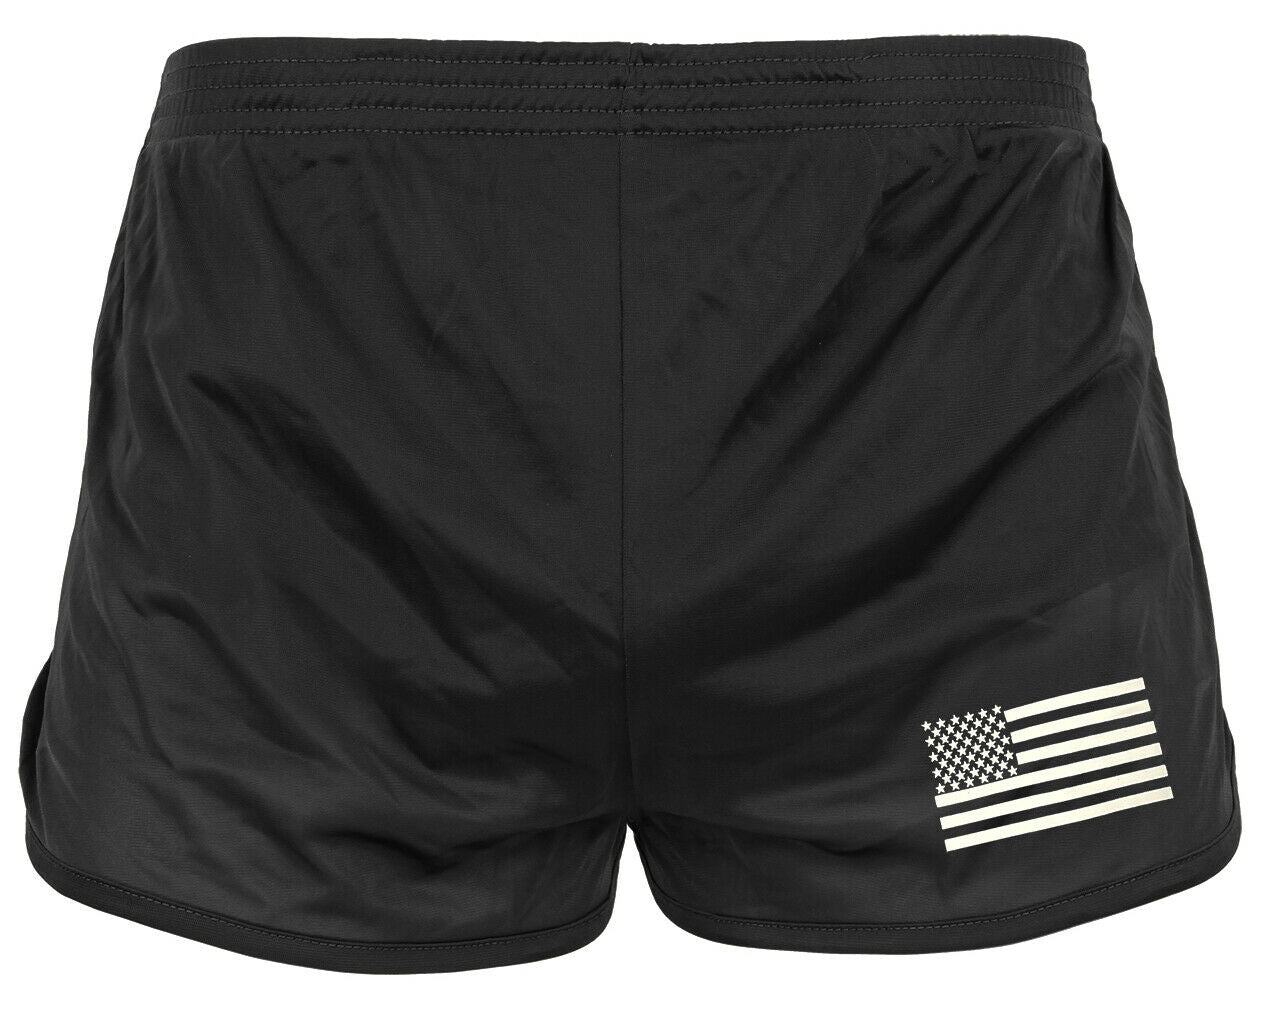 Rothco US Flag Ranger PT (Physical Training) Shorts - Black